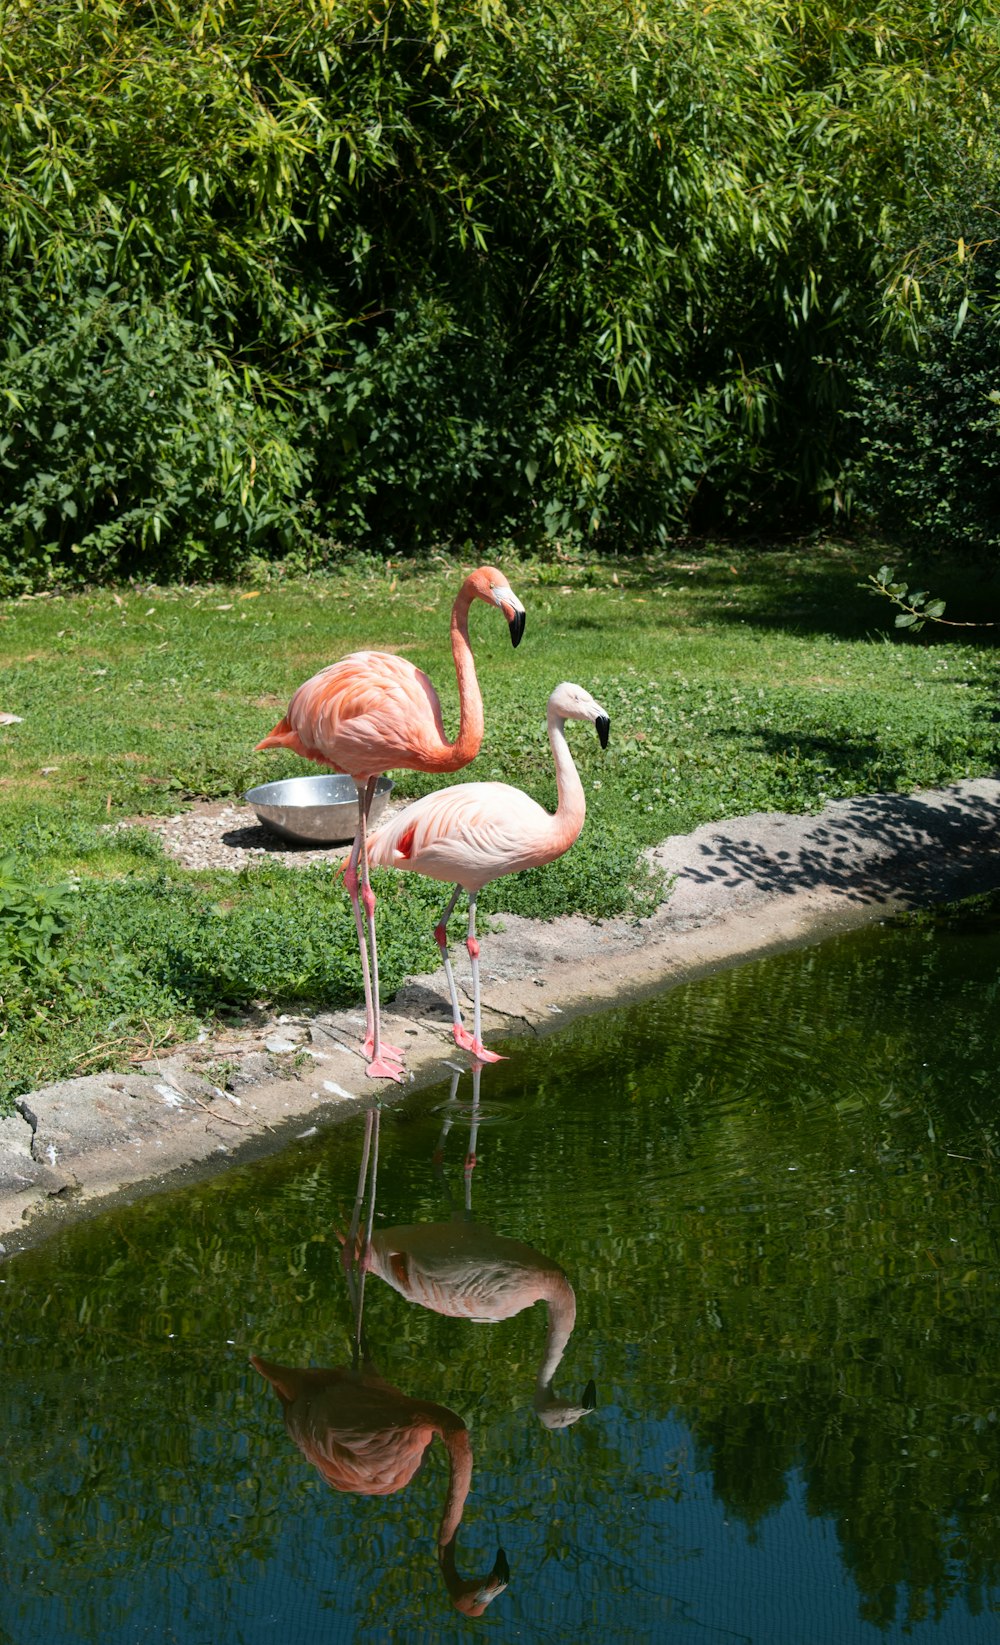 two pink flamingos